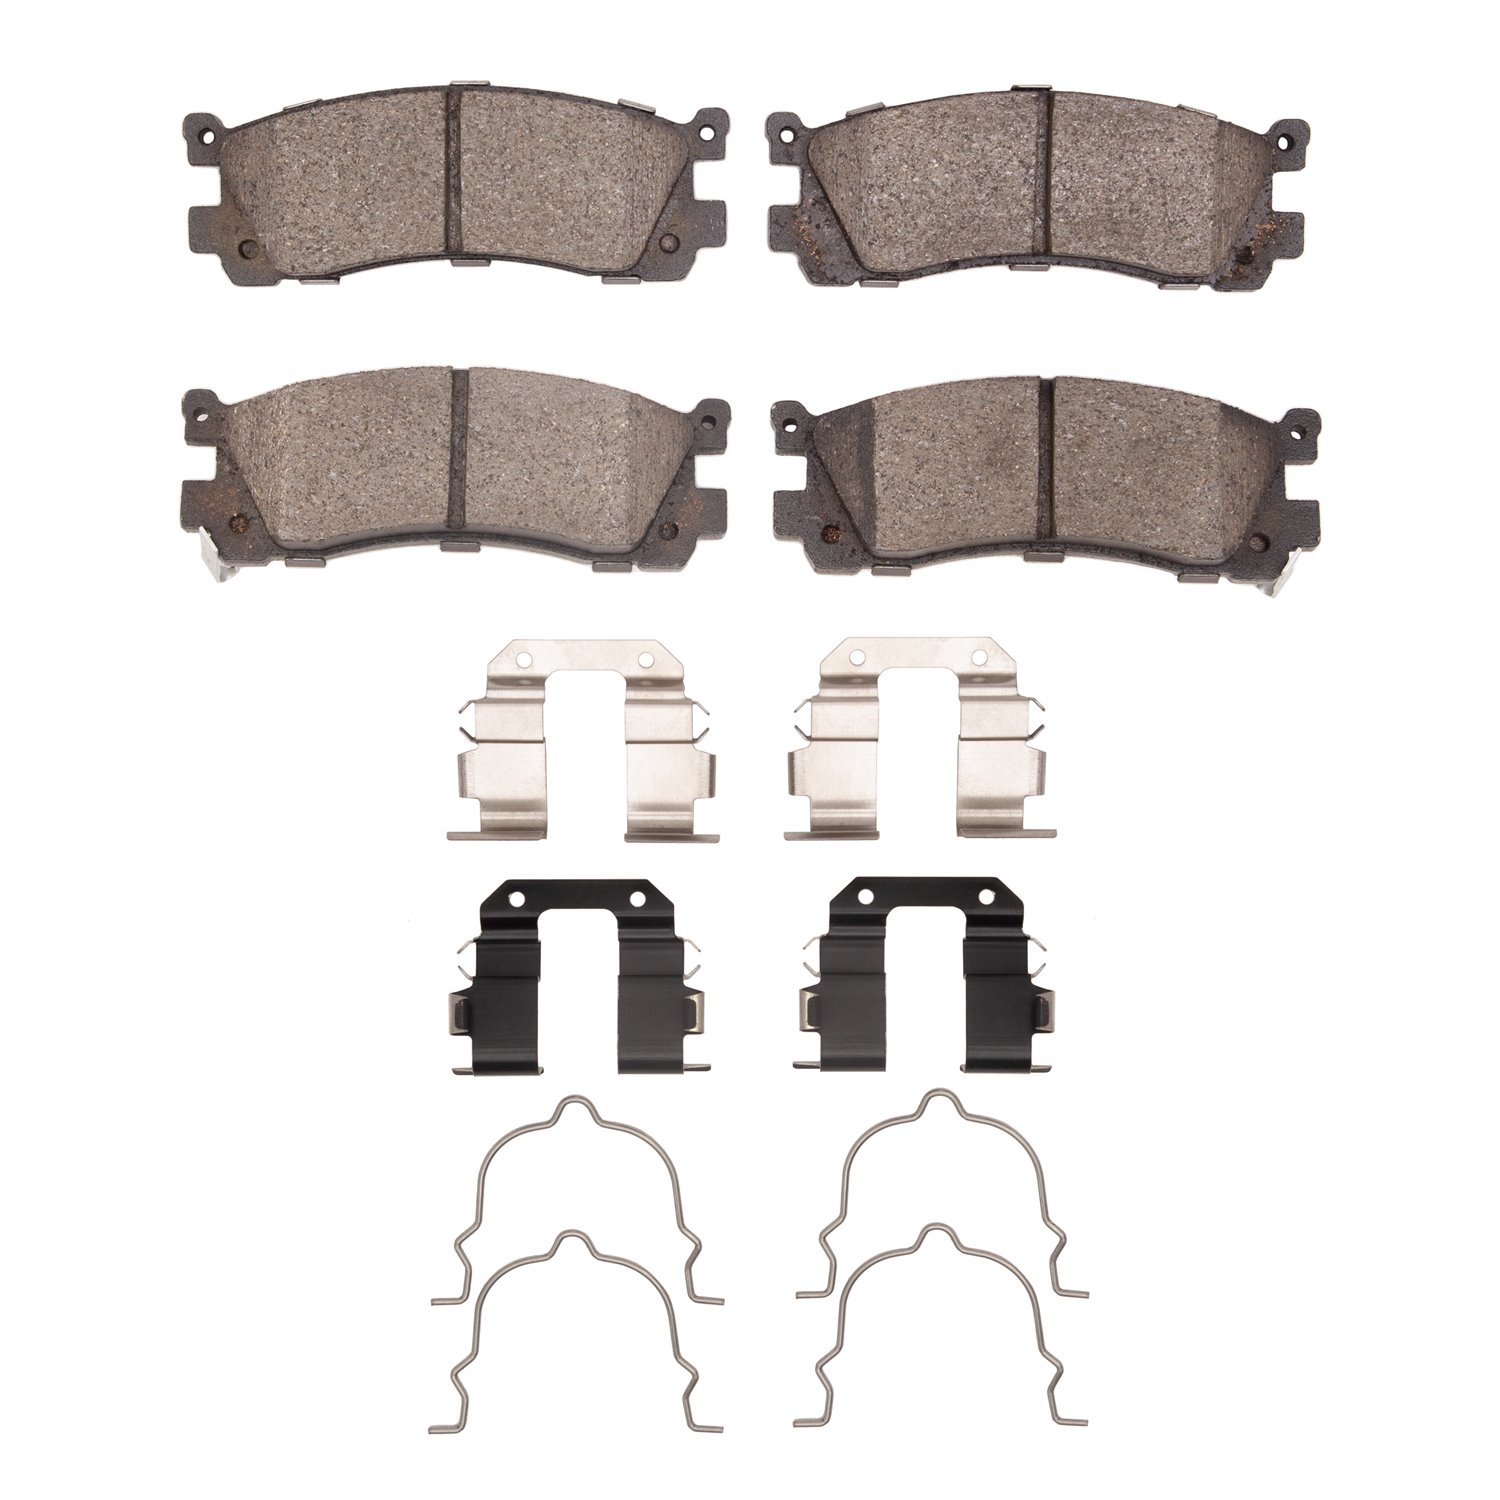 1310-0553-02 3000-Series Ceramic Brake Pads & Hardware Kit, 1995-2002 Ford/Lincoln/Mercury/Mazda, Position: Rear